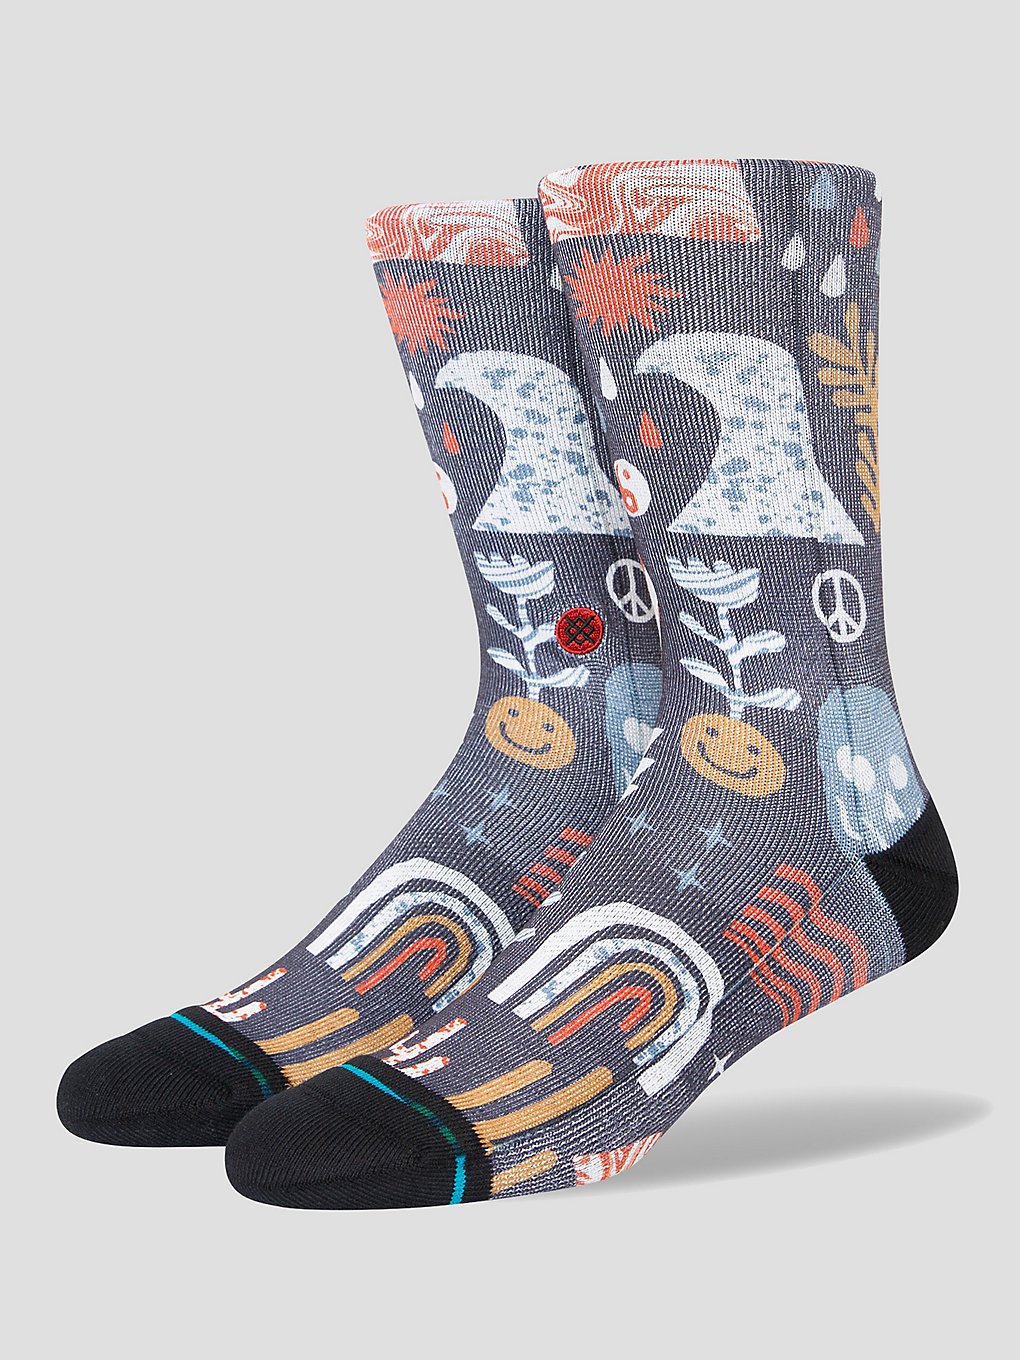 Stance Terrain Socks washedblack kaufen